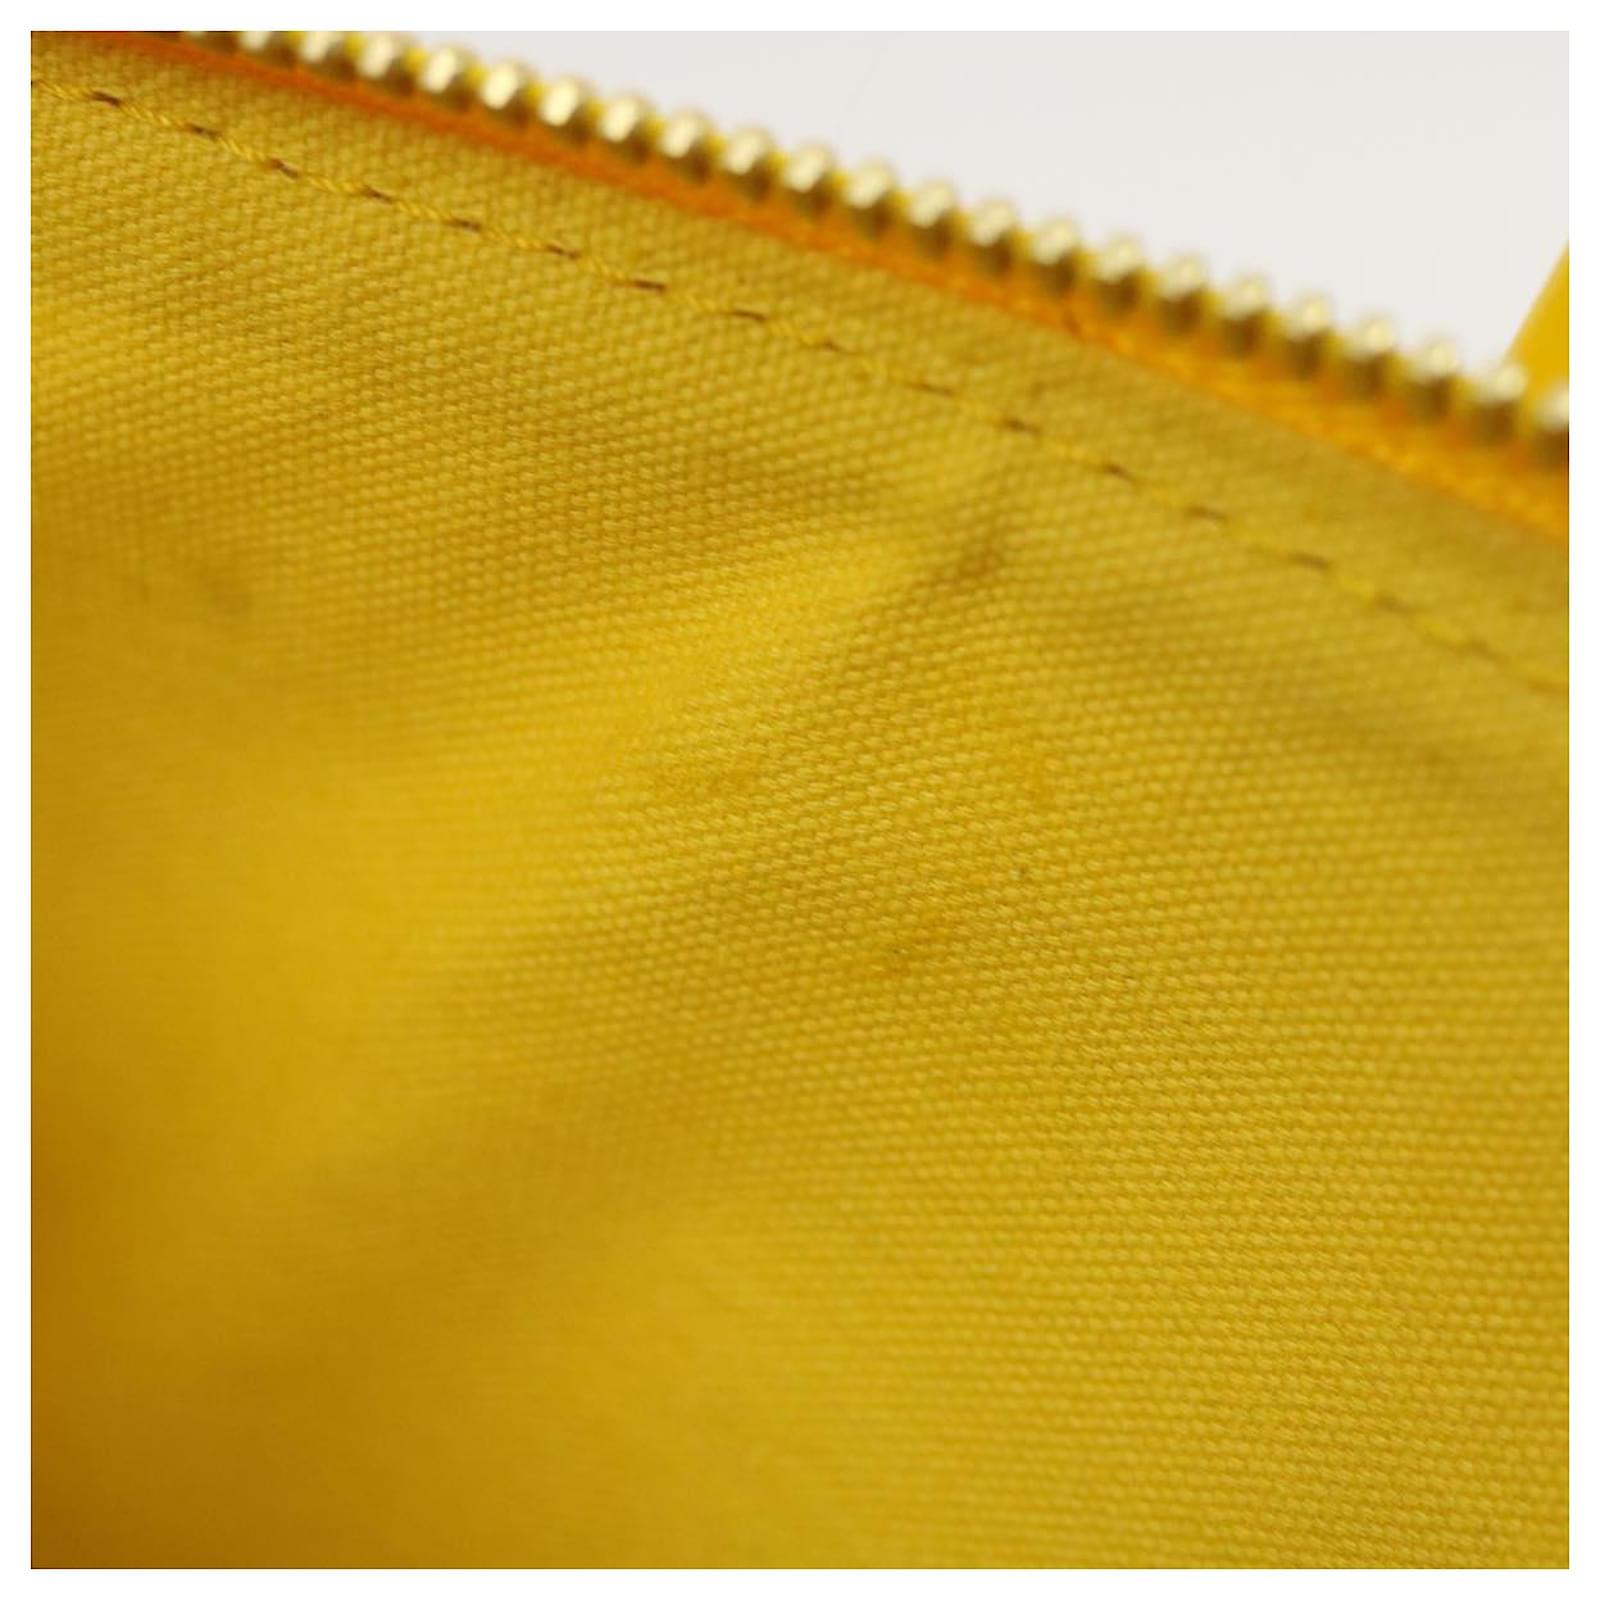 LOUIS VUITTON Damier Color Mobile 2way Shoulder Bag Yellow N41305